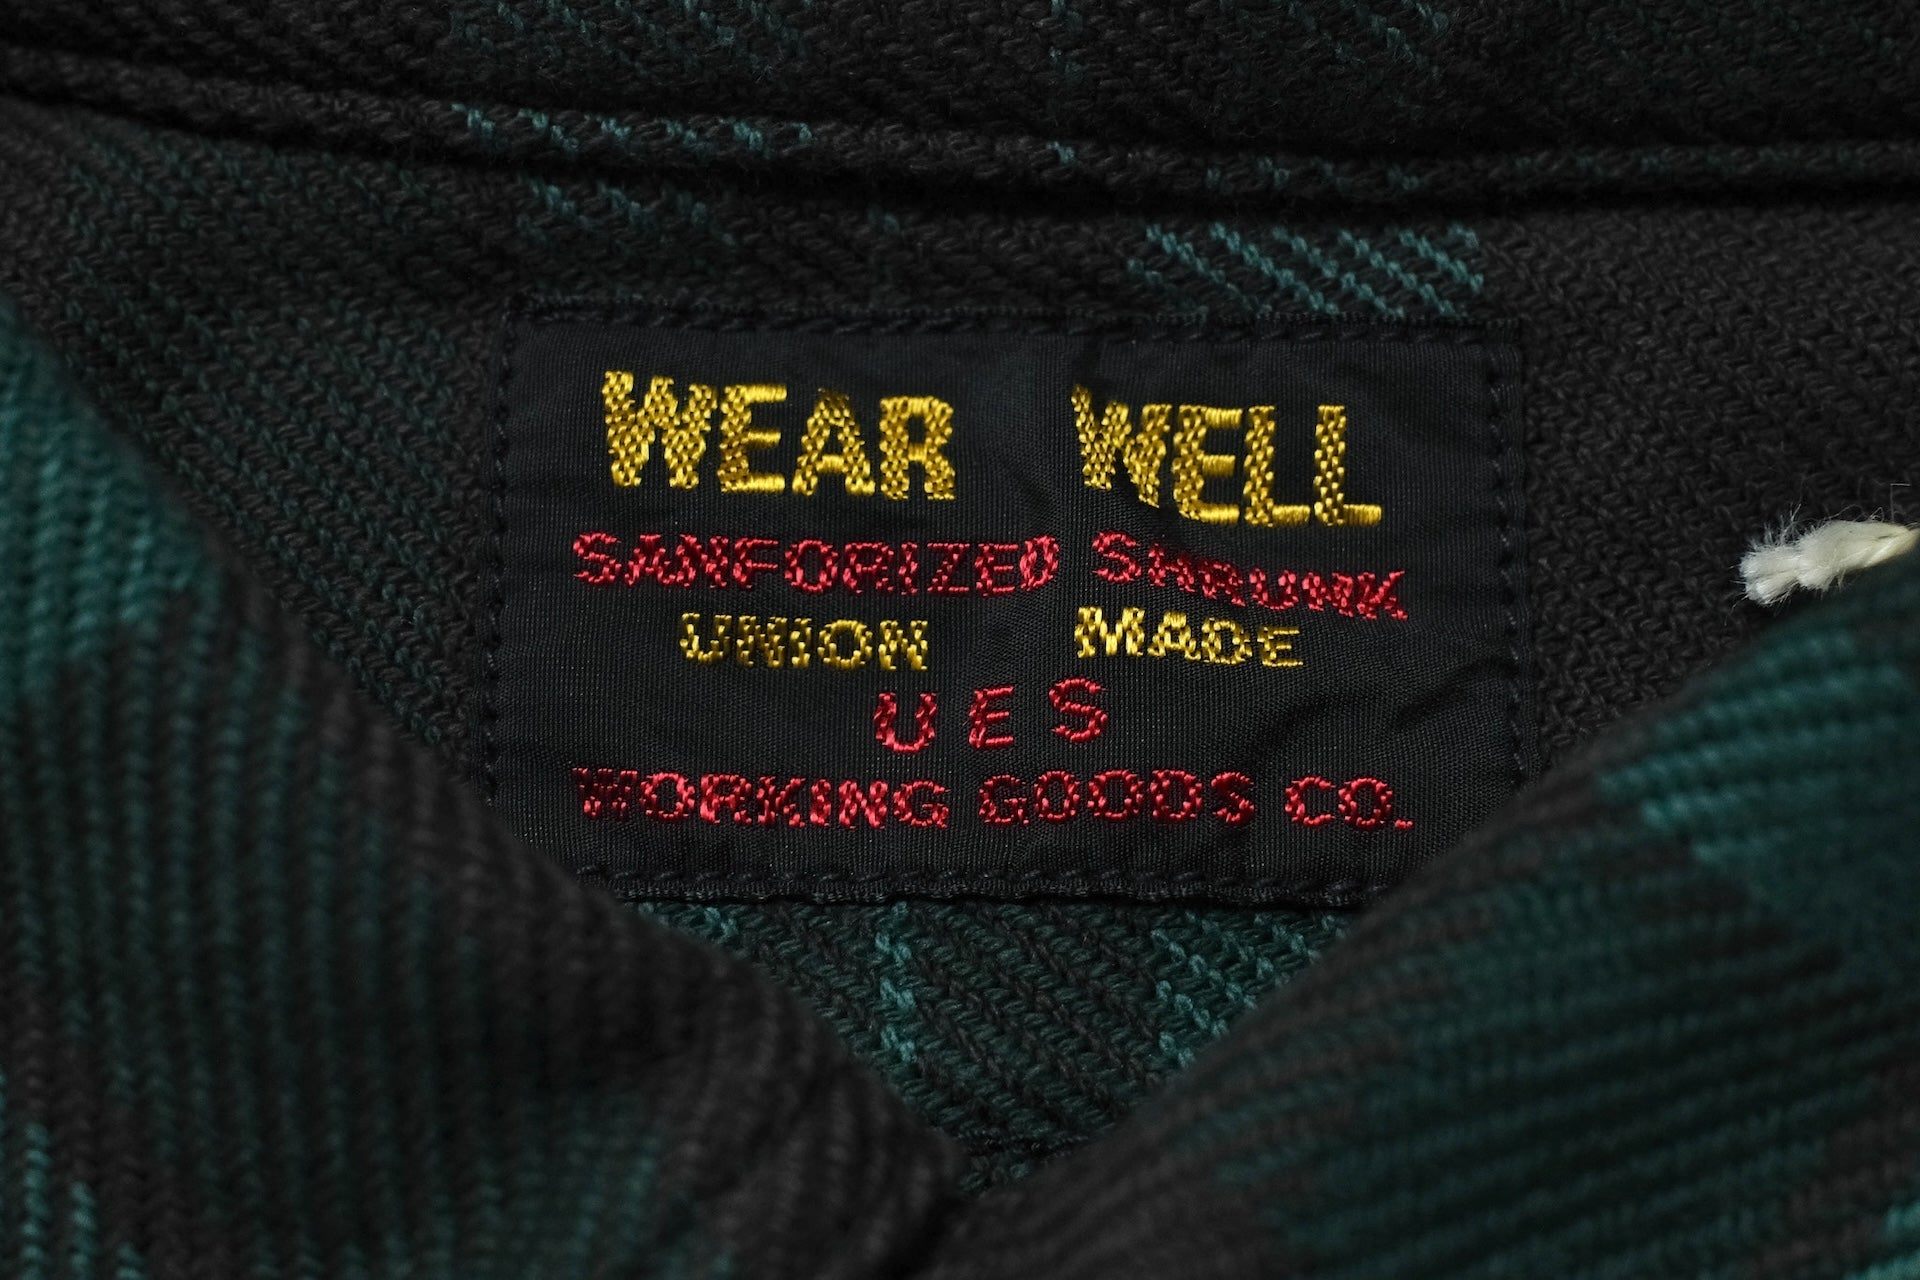 UES 15.5oz Ultra-Heavyweight Flannel Utility Workshirt (Forest Green)